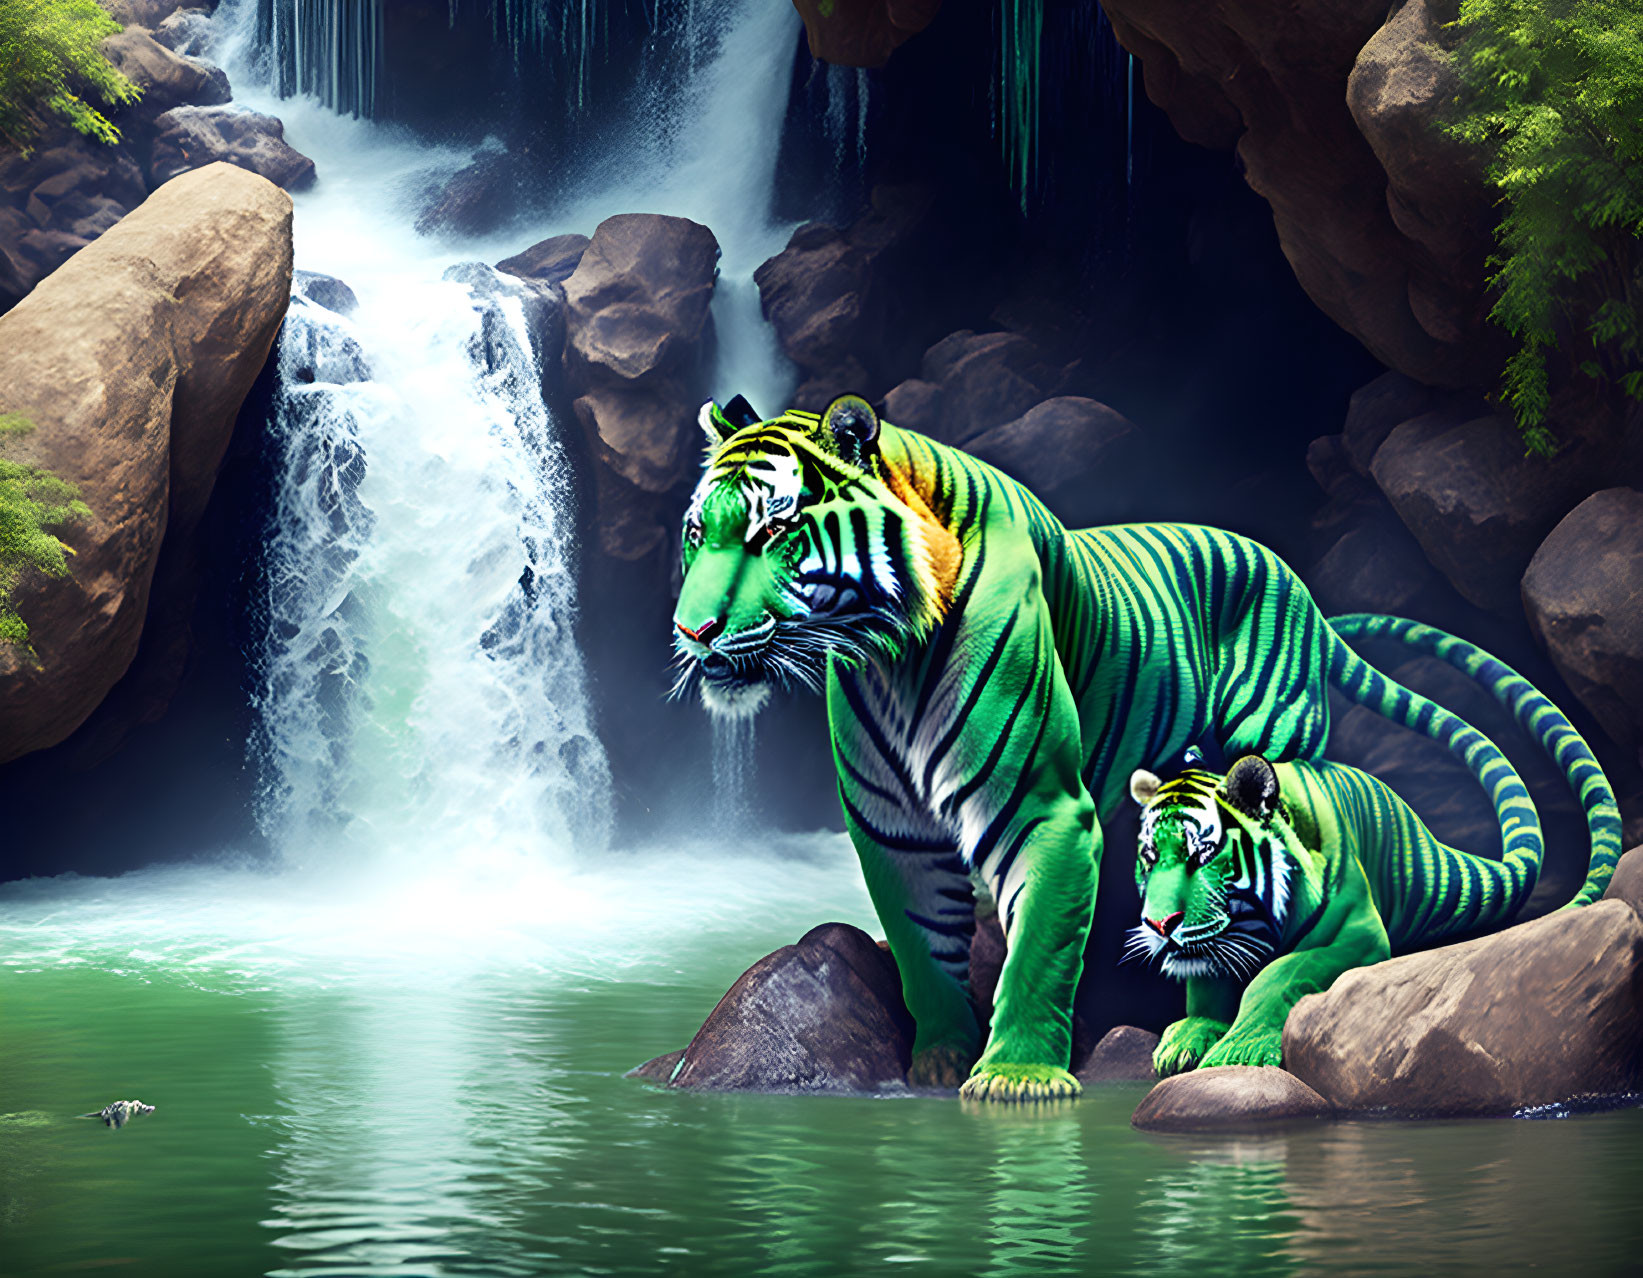 Vibrant green striped tigers resting near waterfall in lush setting